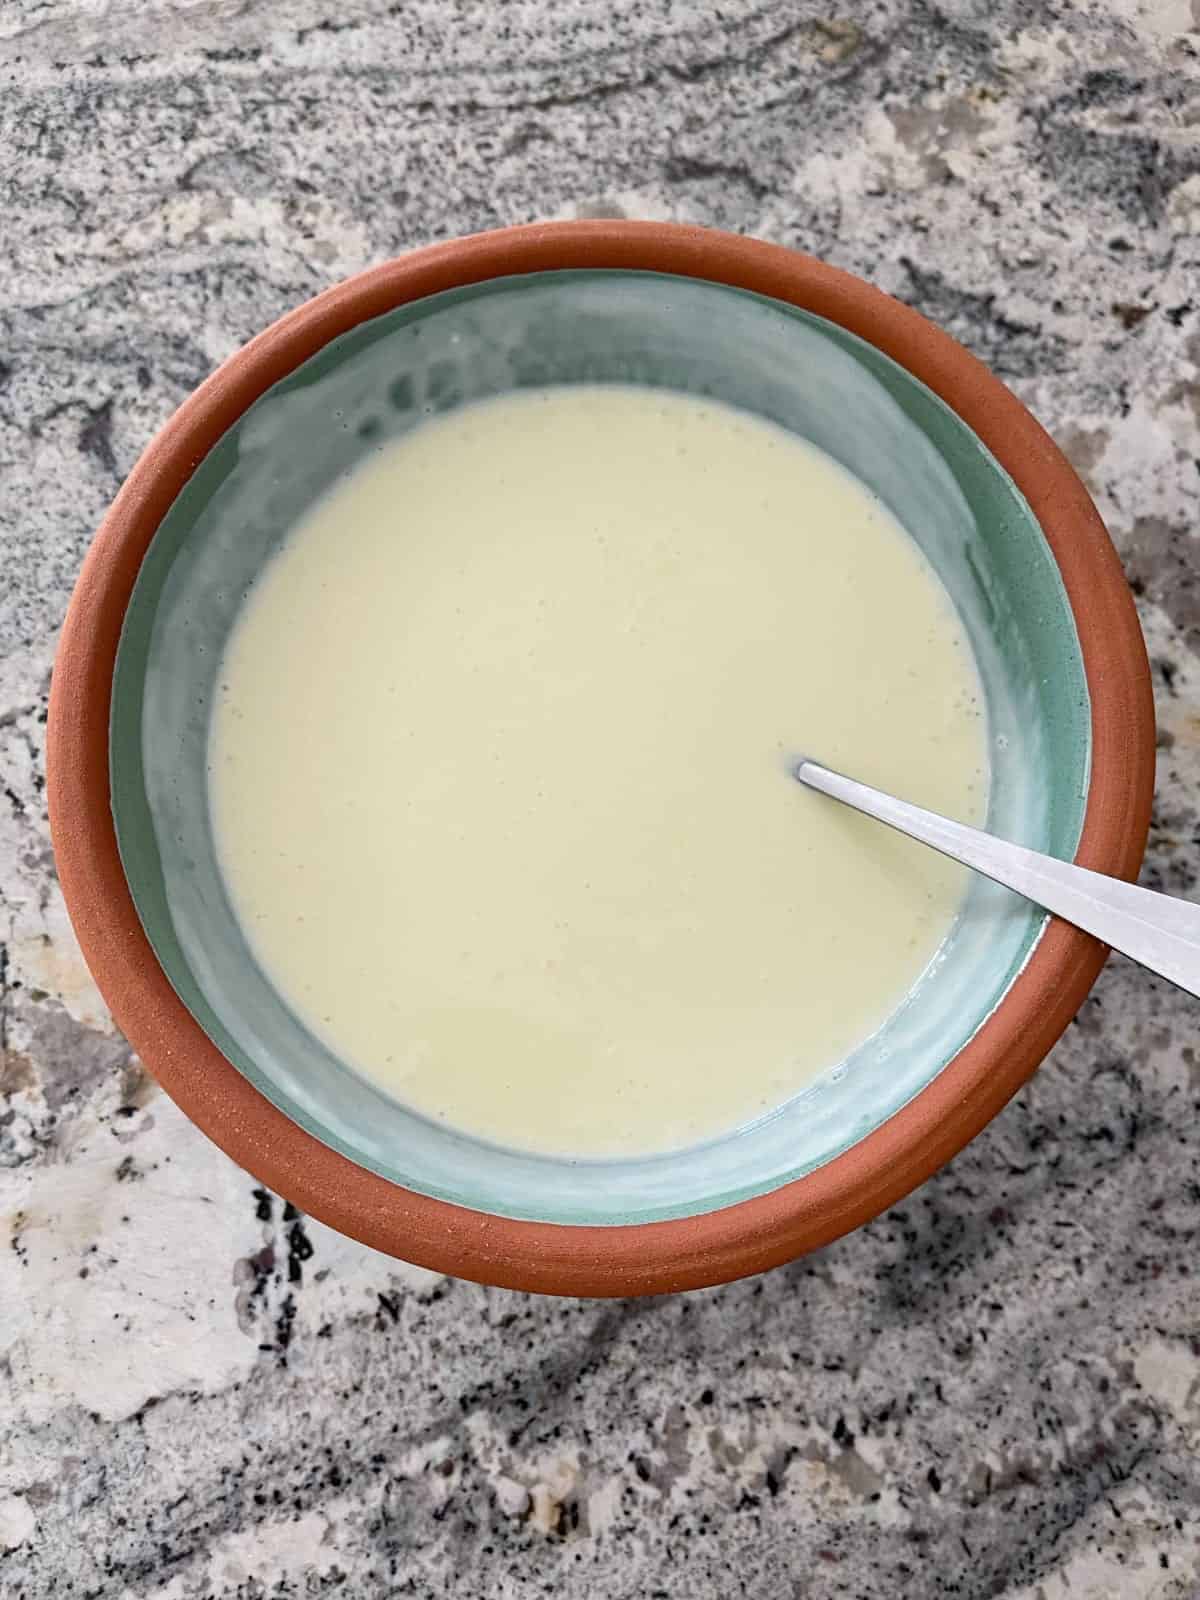 Mixing lemon jello with vanilla yogurt with spoon in green bowl.